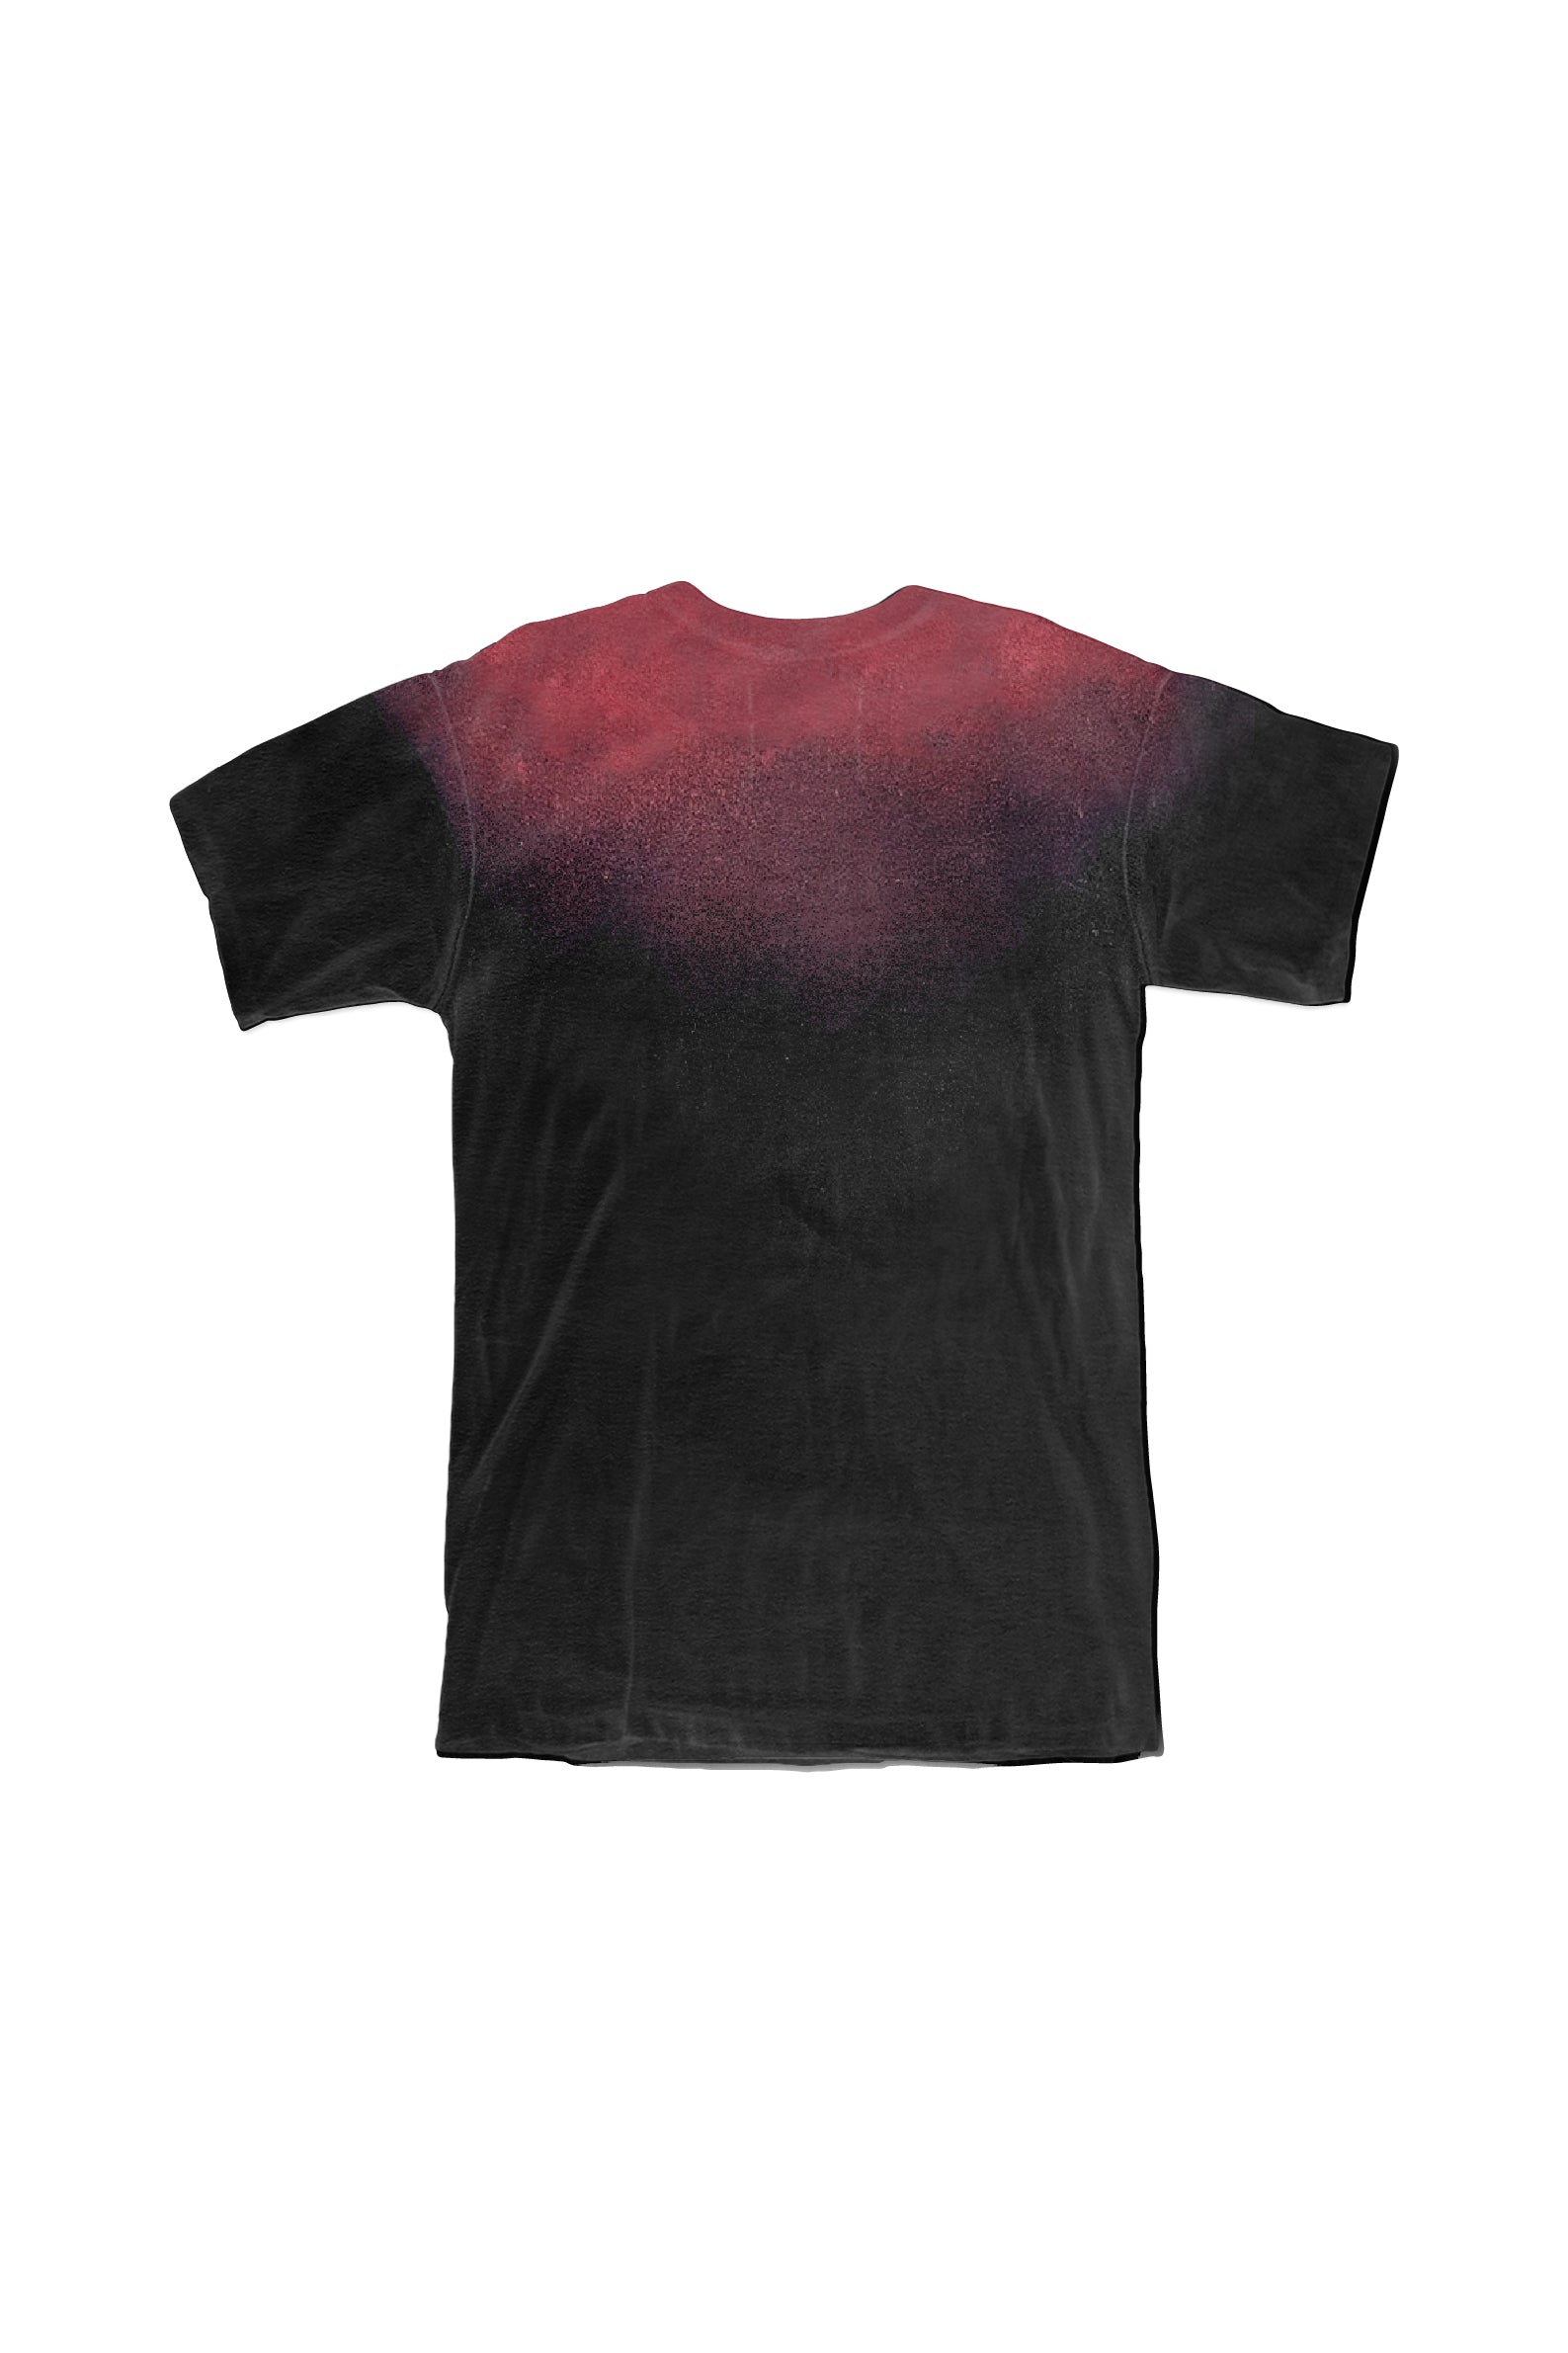 Purple Brand Black Textured Tie Dye Heat Scan T-shirt for Men